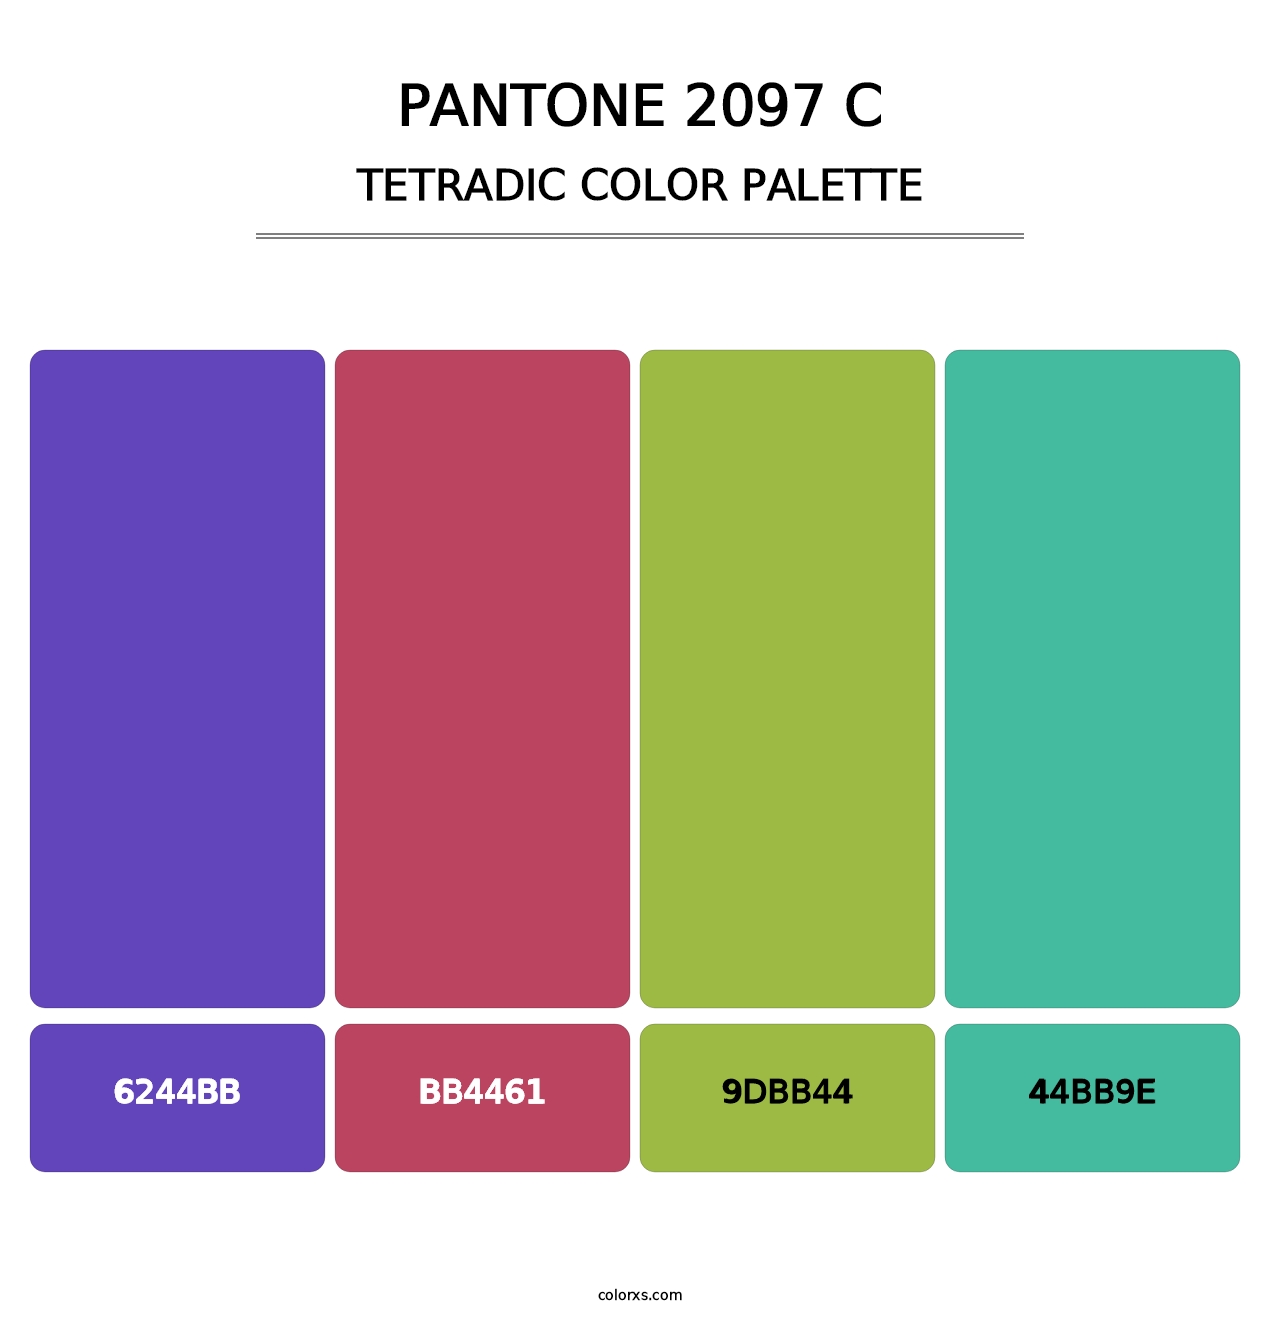 PANTONE 2097 C - Tetradic Color Palette